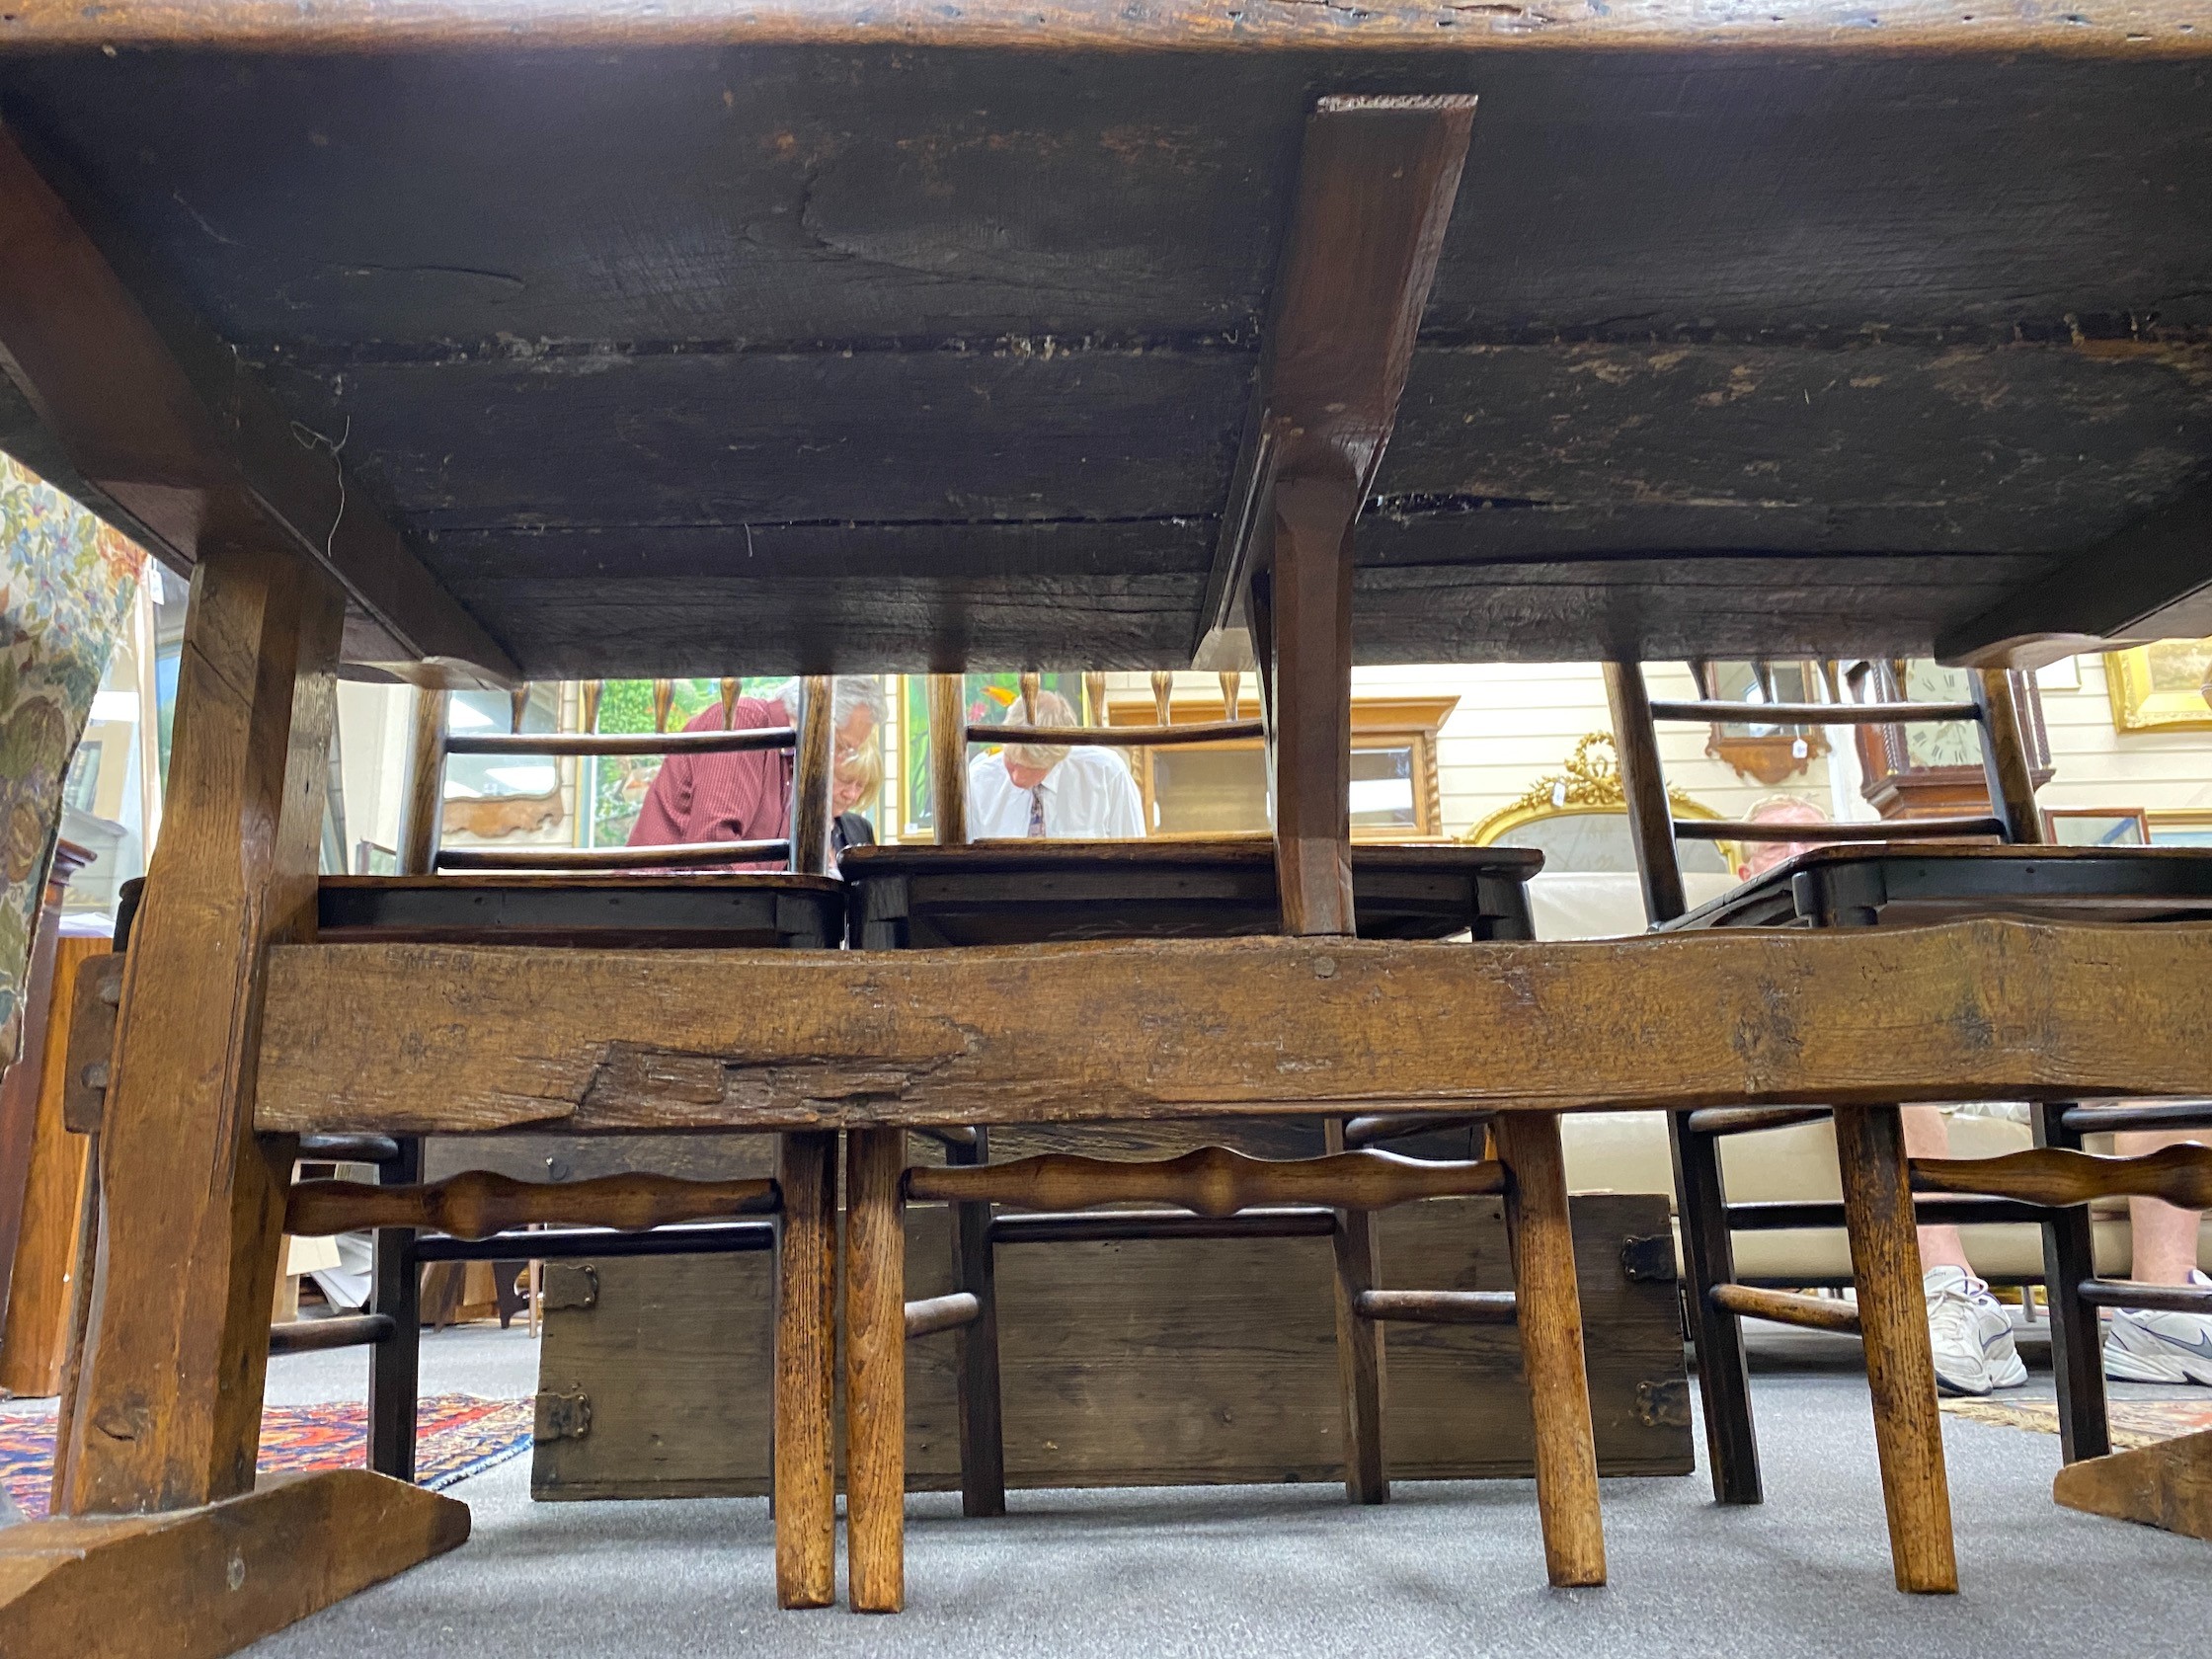 An antique oak refectory dining table, length 162cm, width 82cm, height 74cm